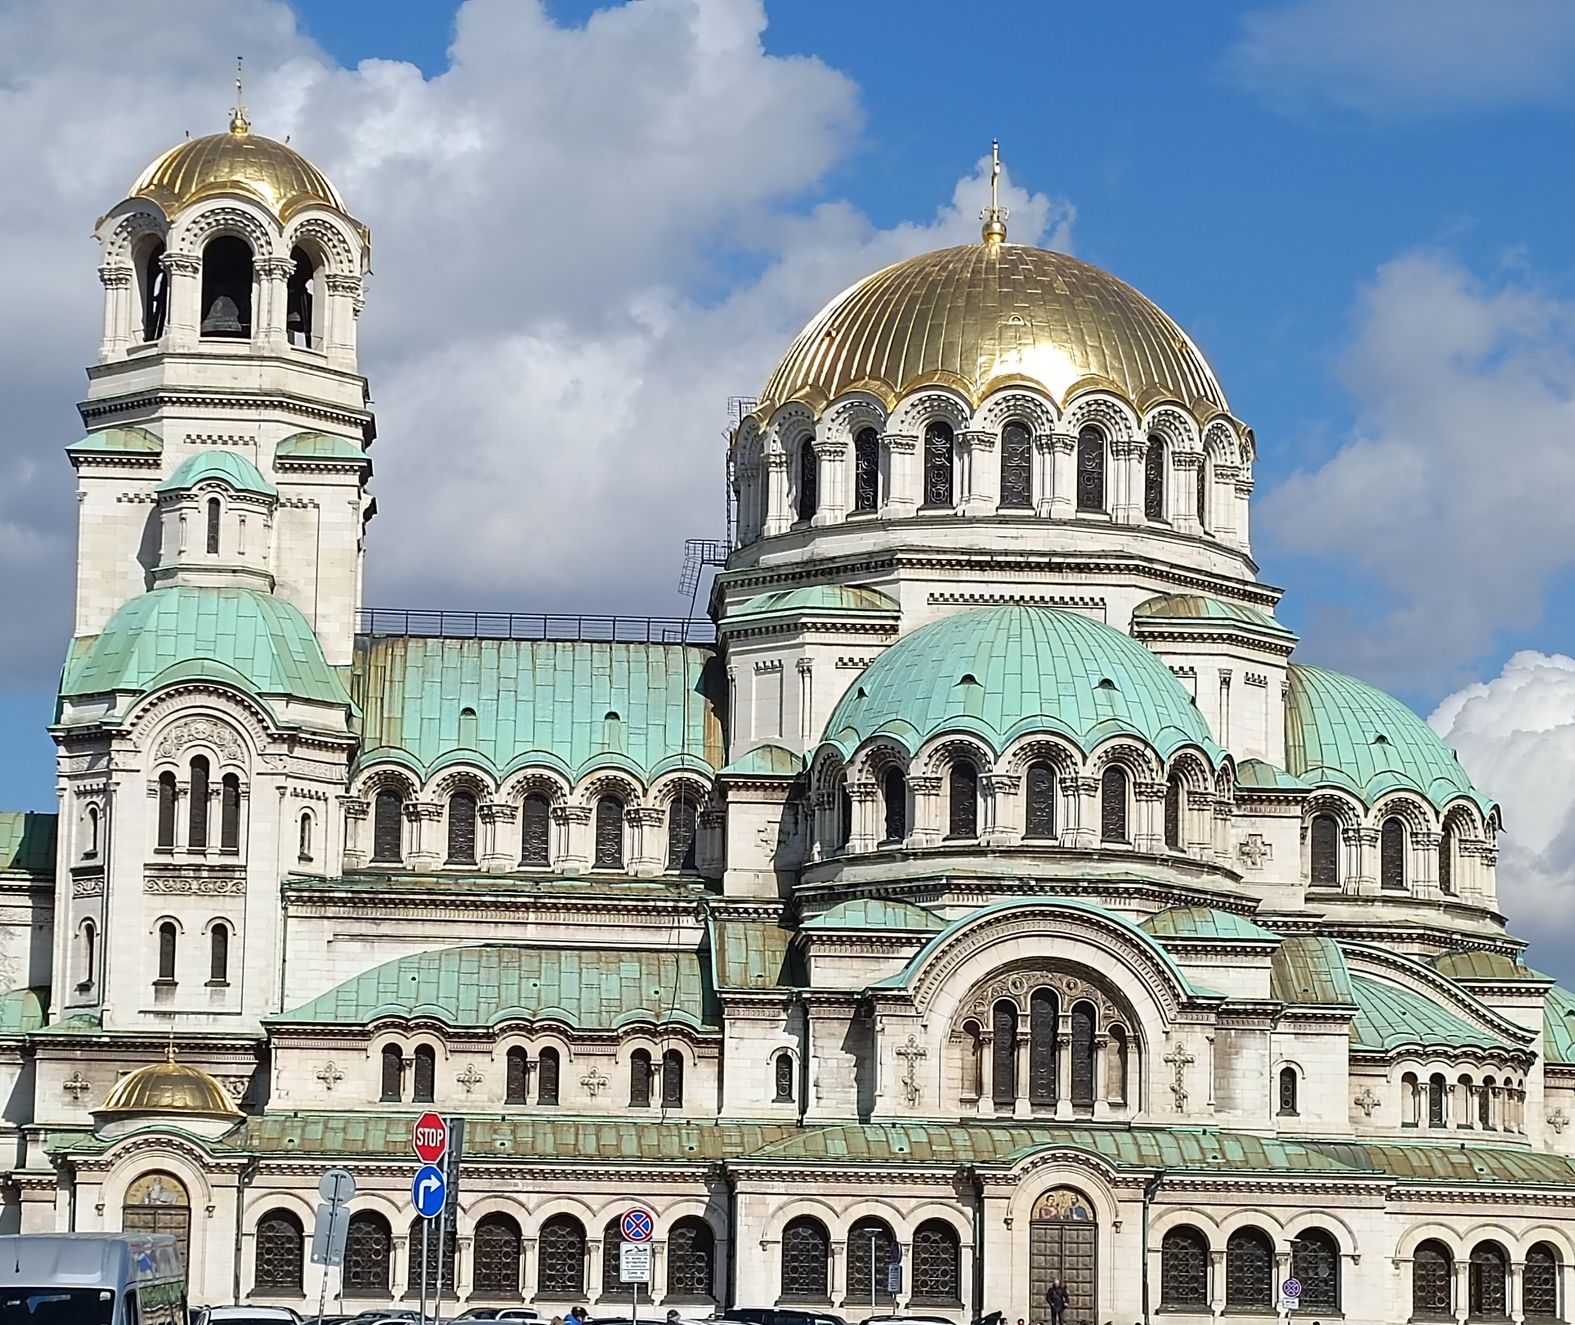 BUŁGARIA – Sofia i miejsca kultu religijnego